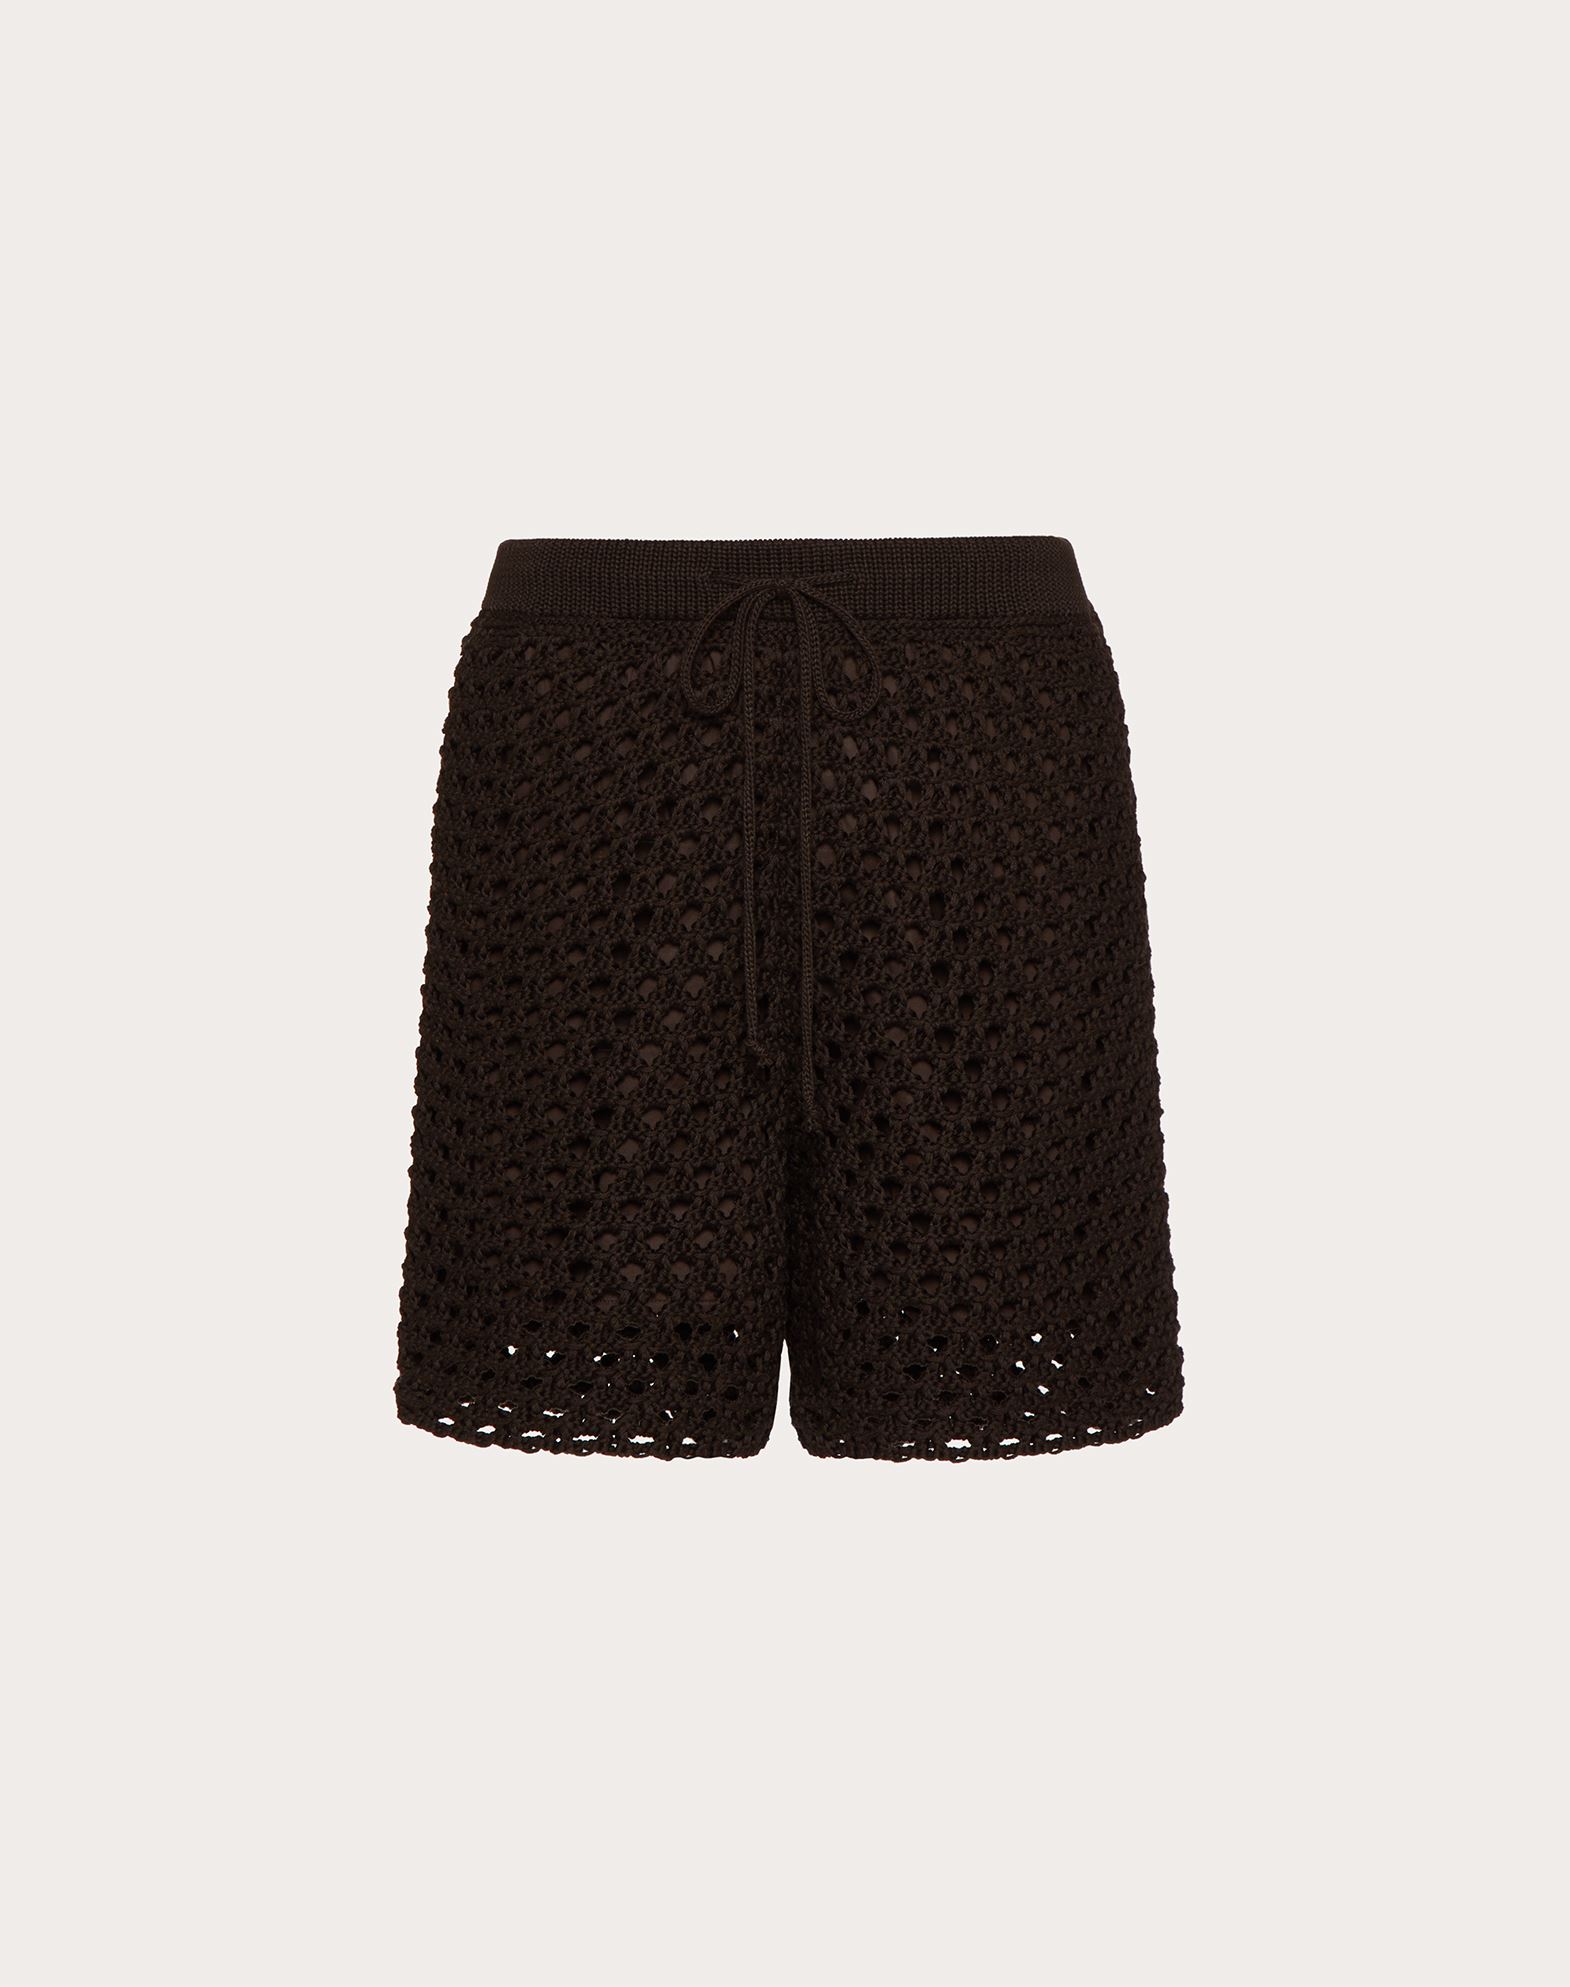 Valentino Uomo Crochet Shorts In Brown